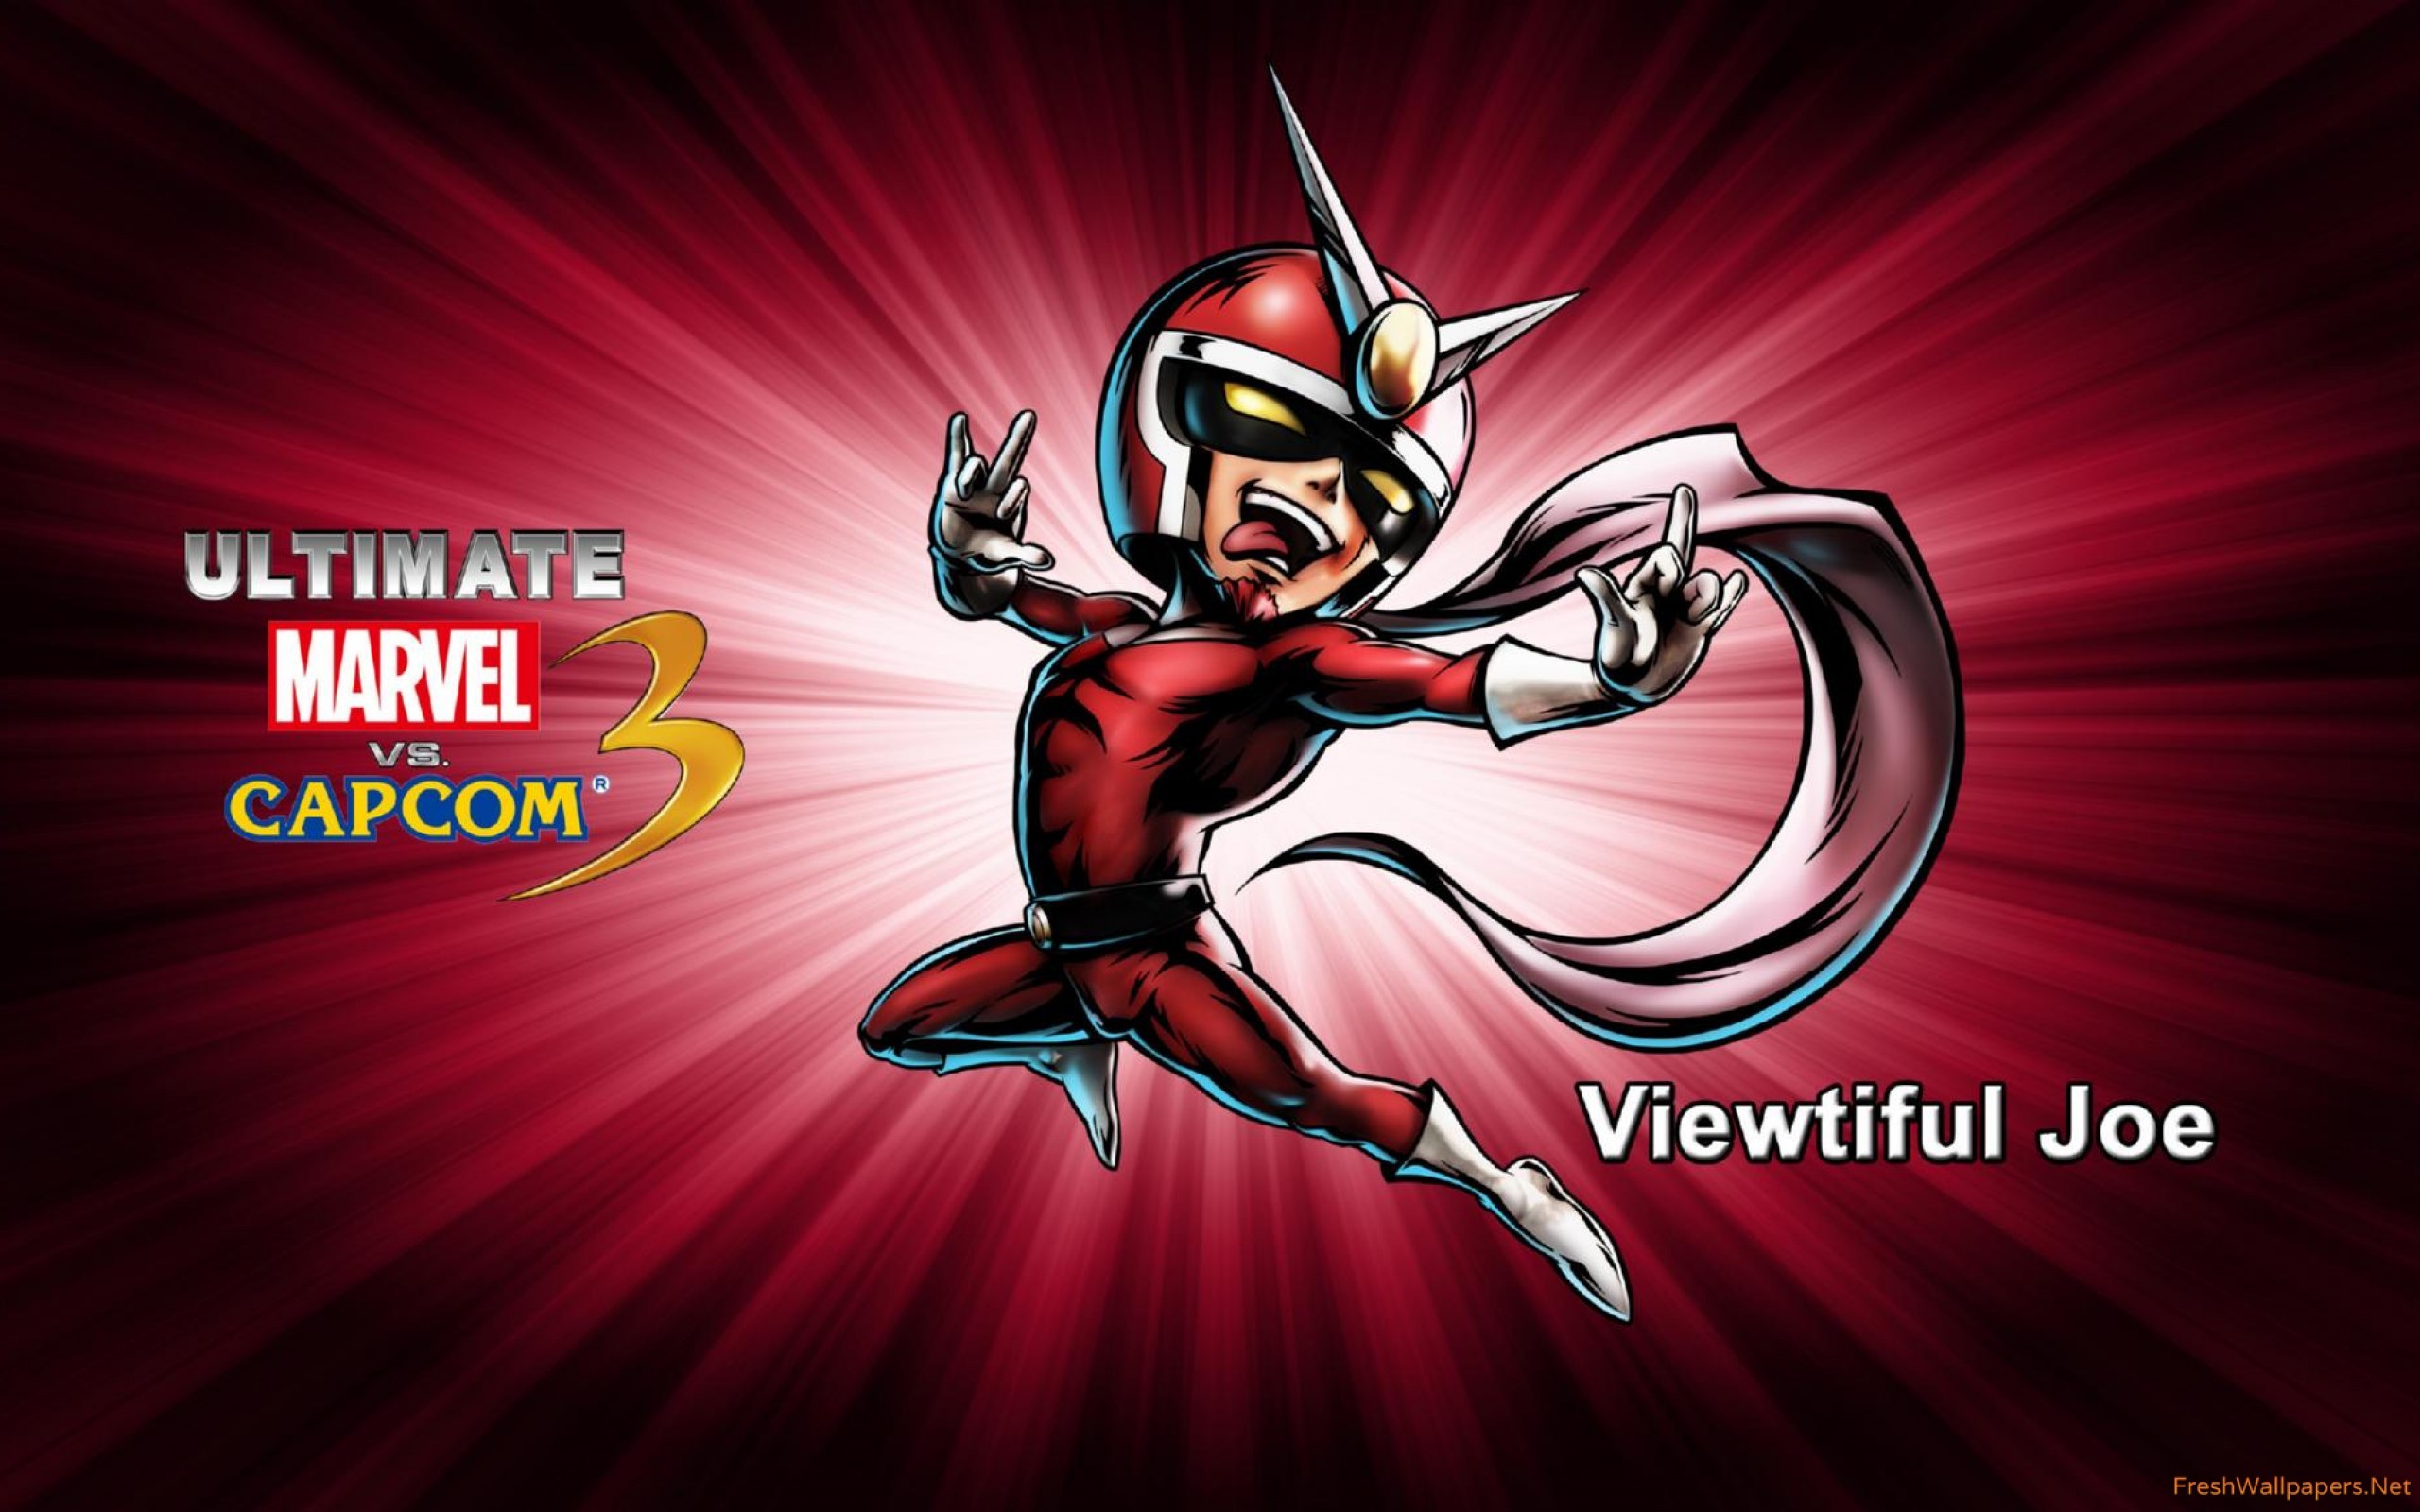 2560x1600 Viewtiful Joe - Ultimate Marvel vs. Capcom 3 wallpaper